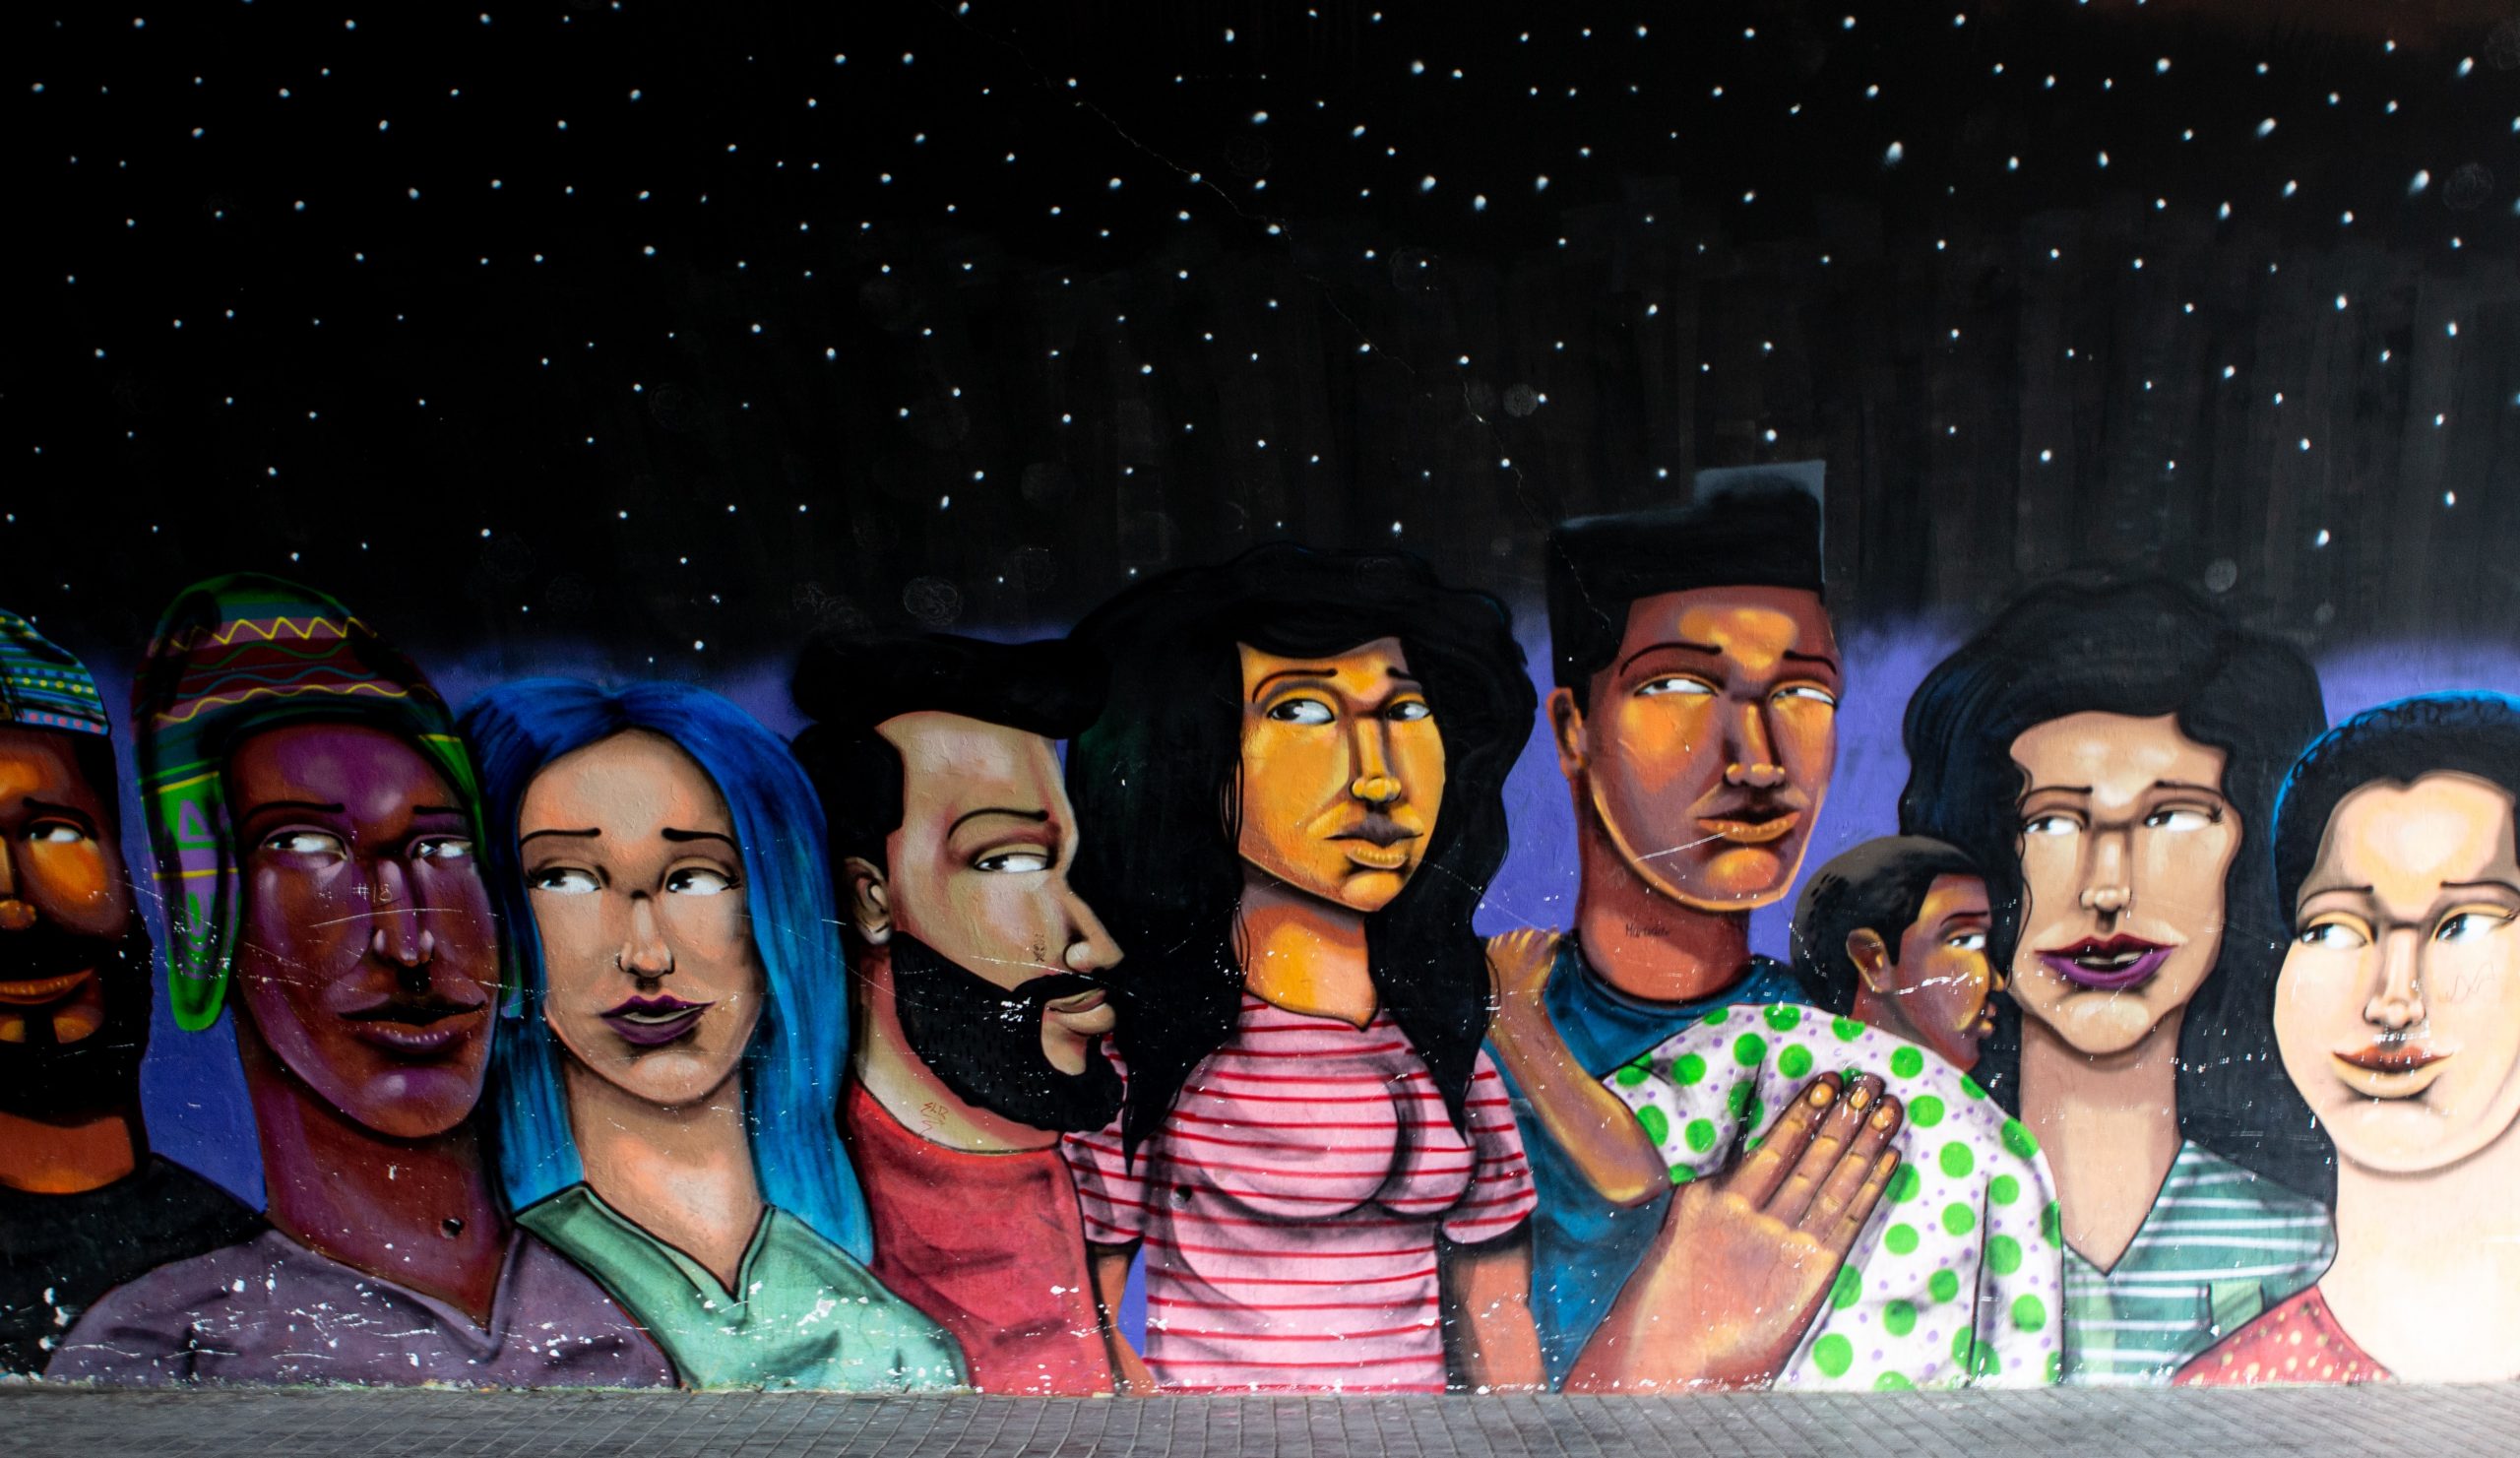 Graffiti art of a diverse group of people